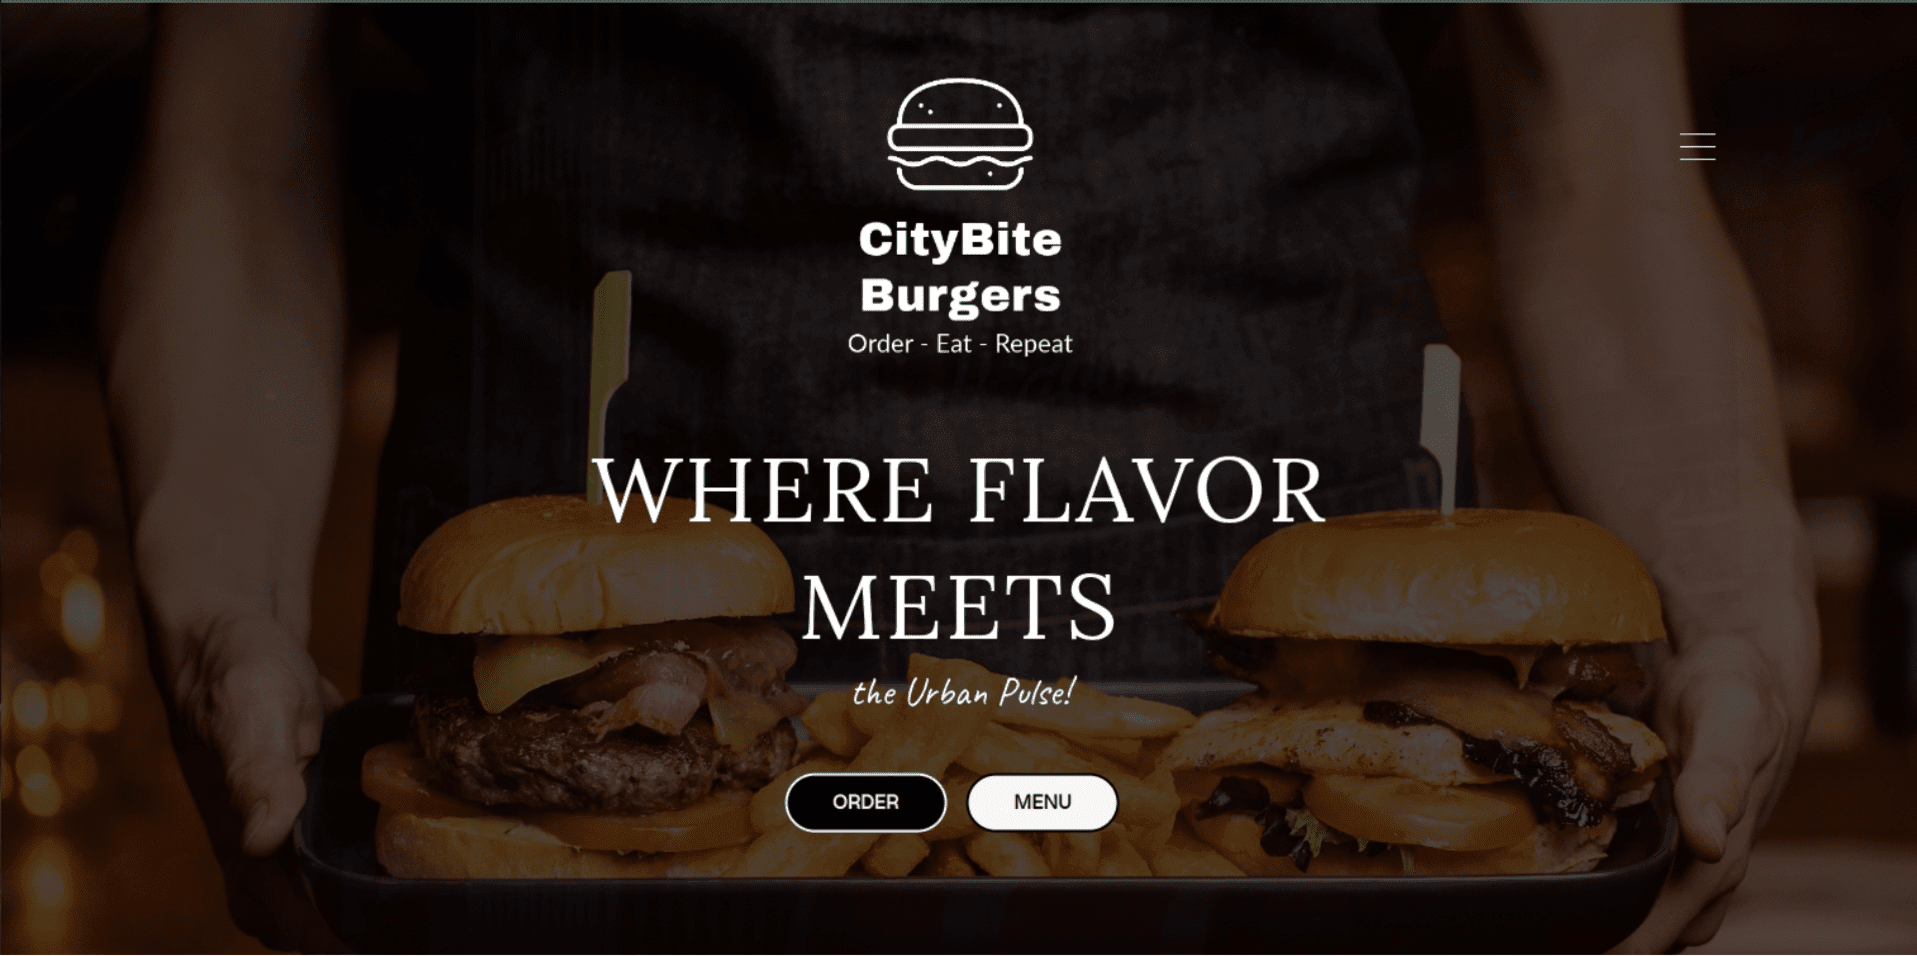 CityBite Burgers website